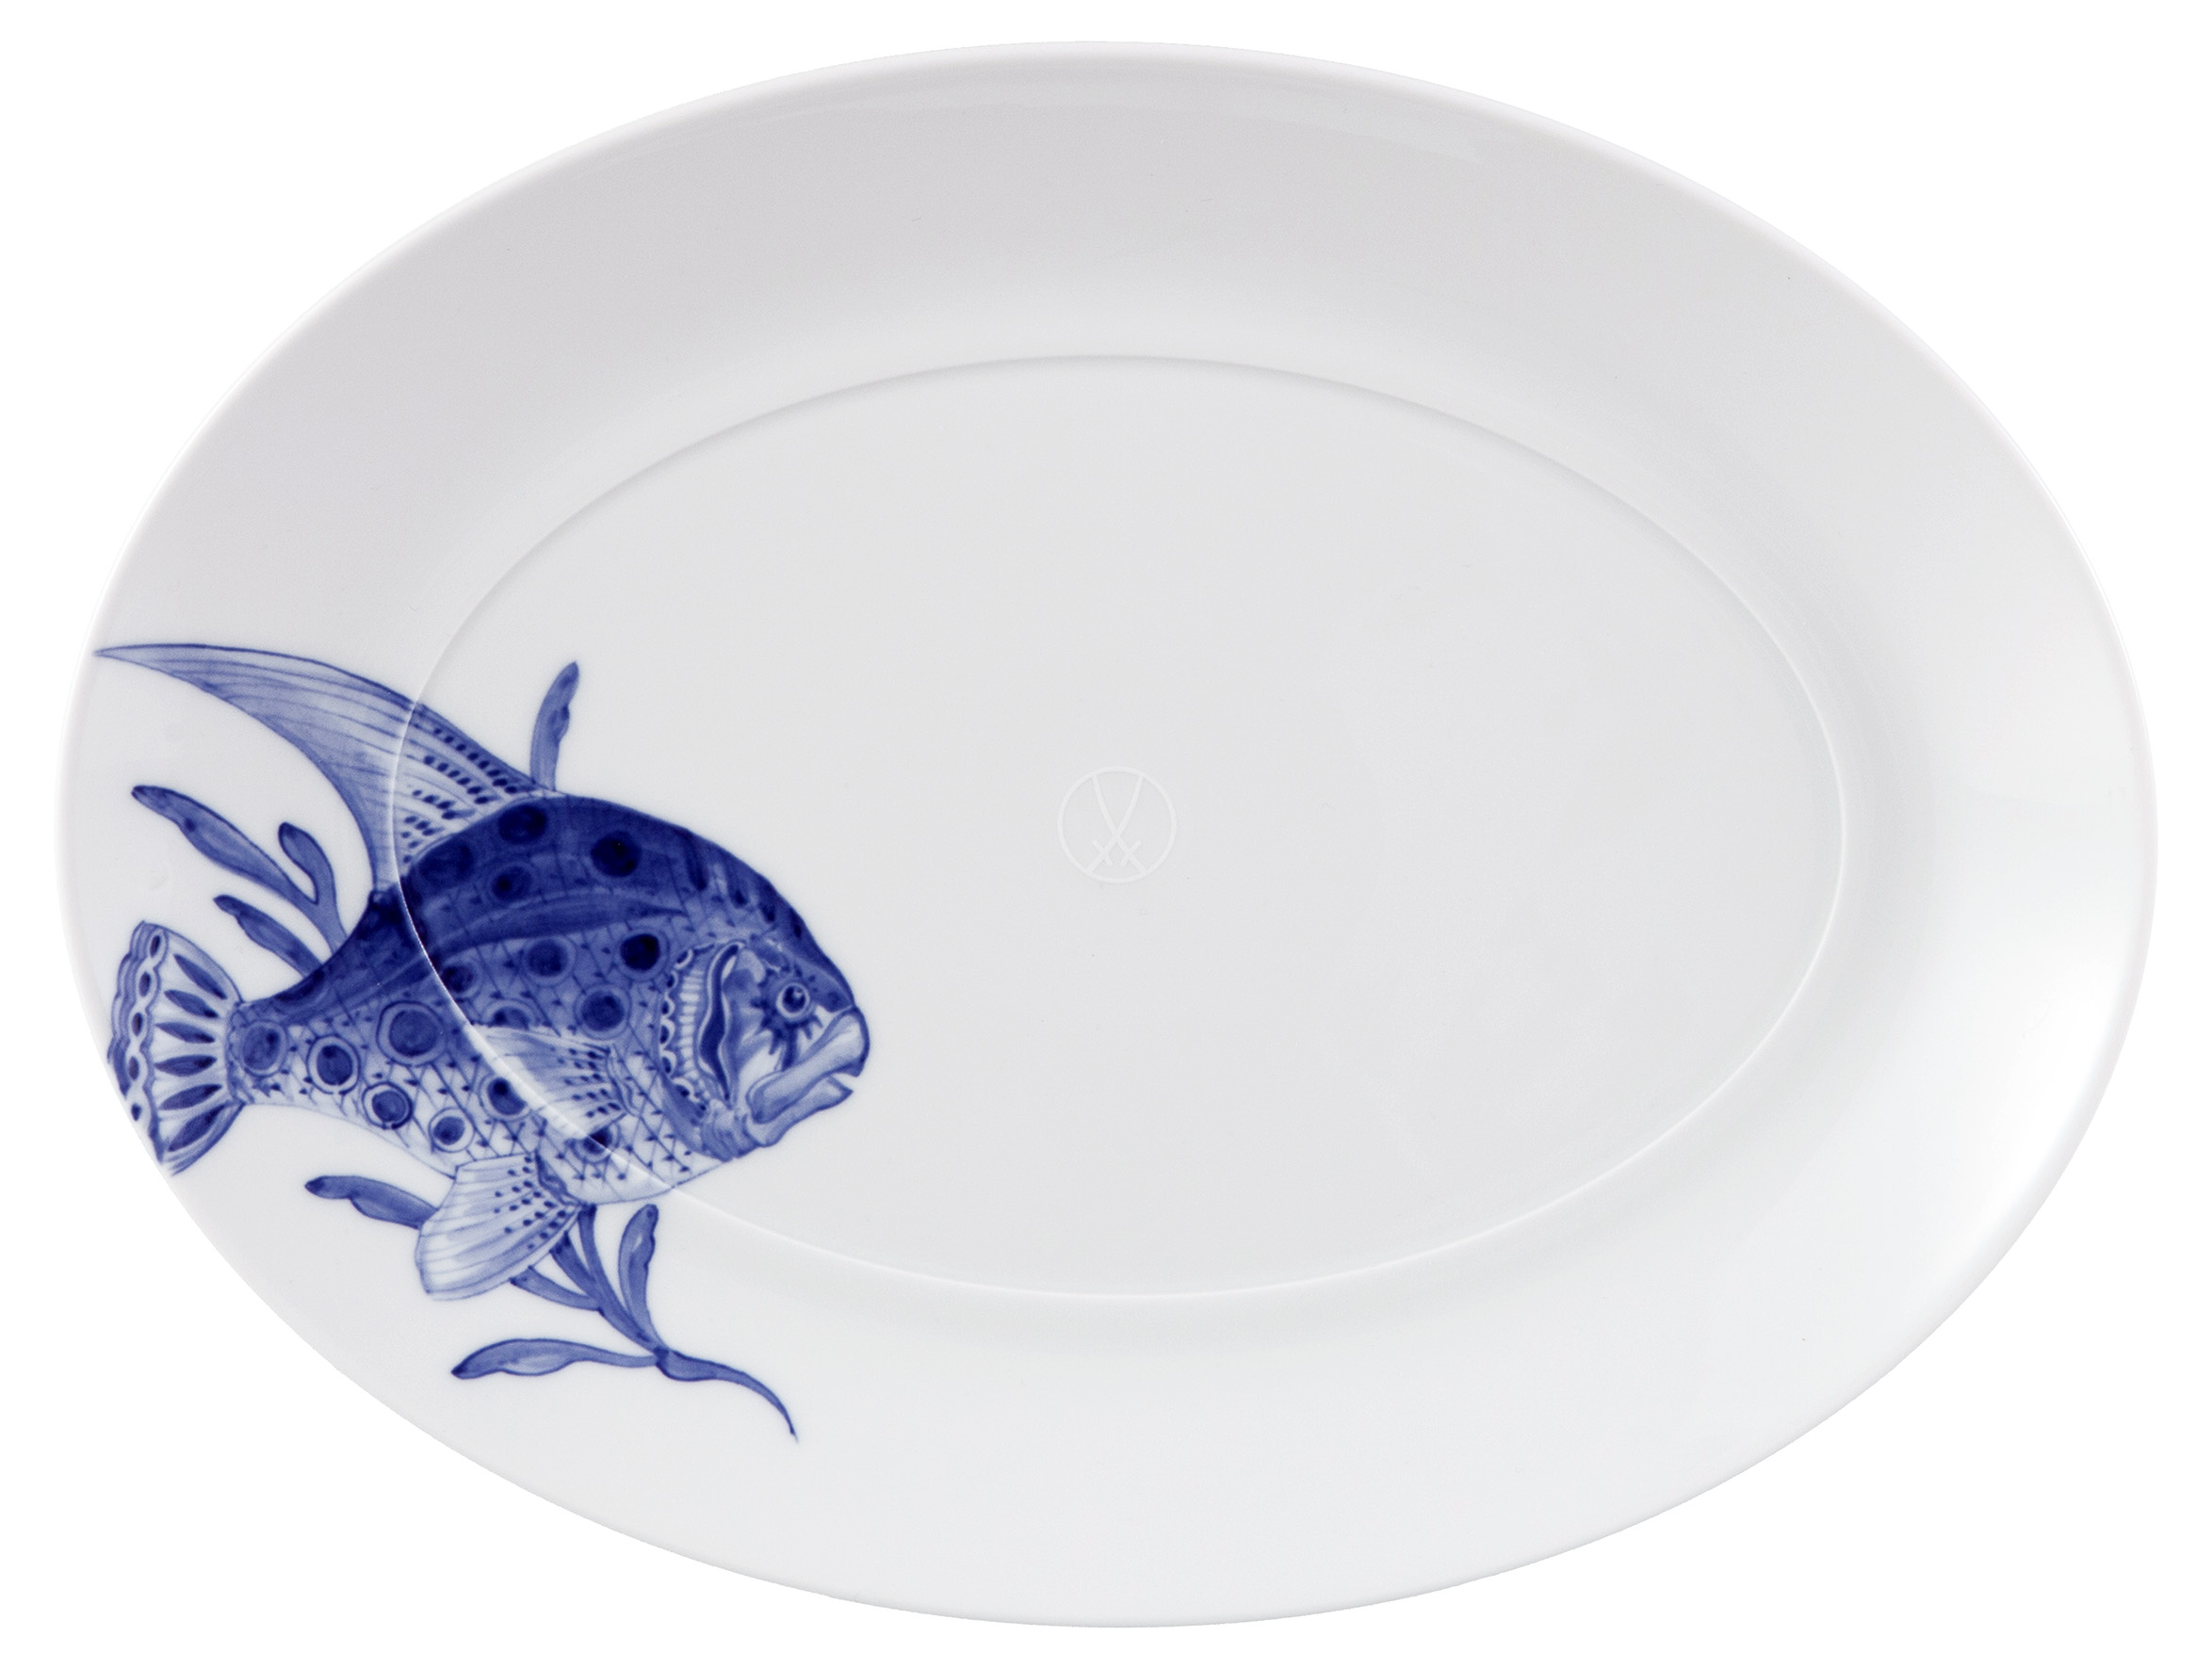 Platte 32cm, oval, Motive Fisch Cosmopolitan Blue Treasures Meissen